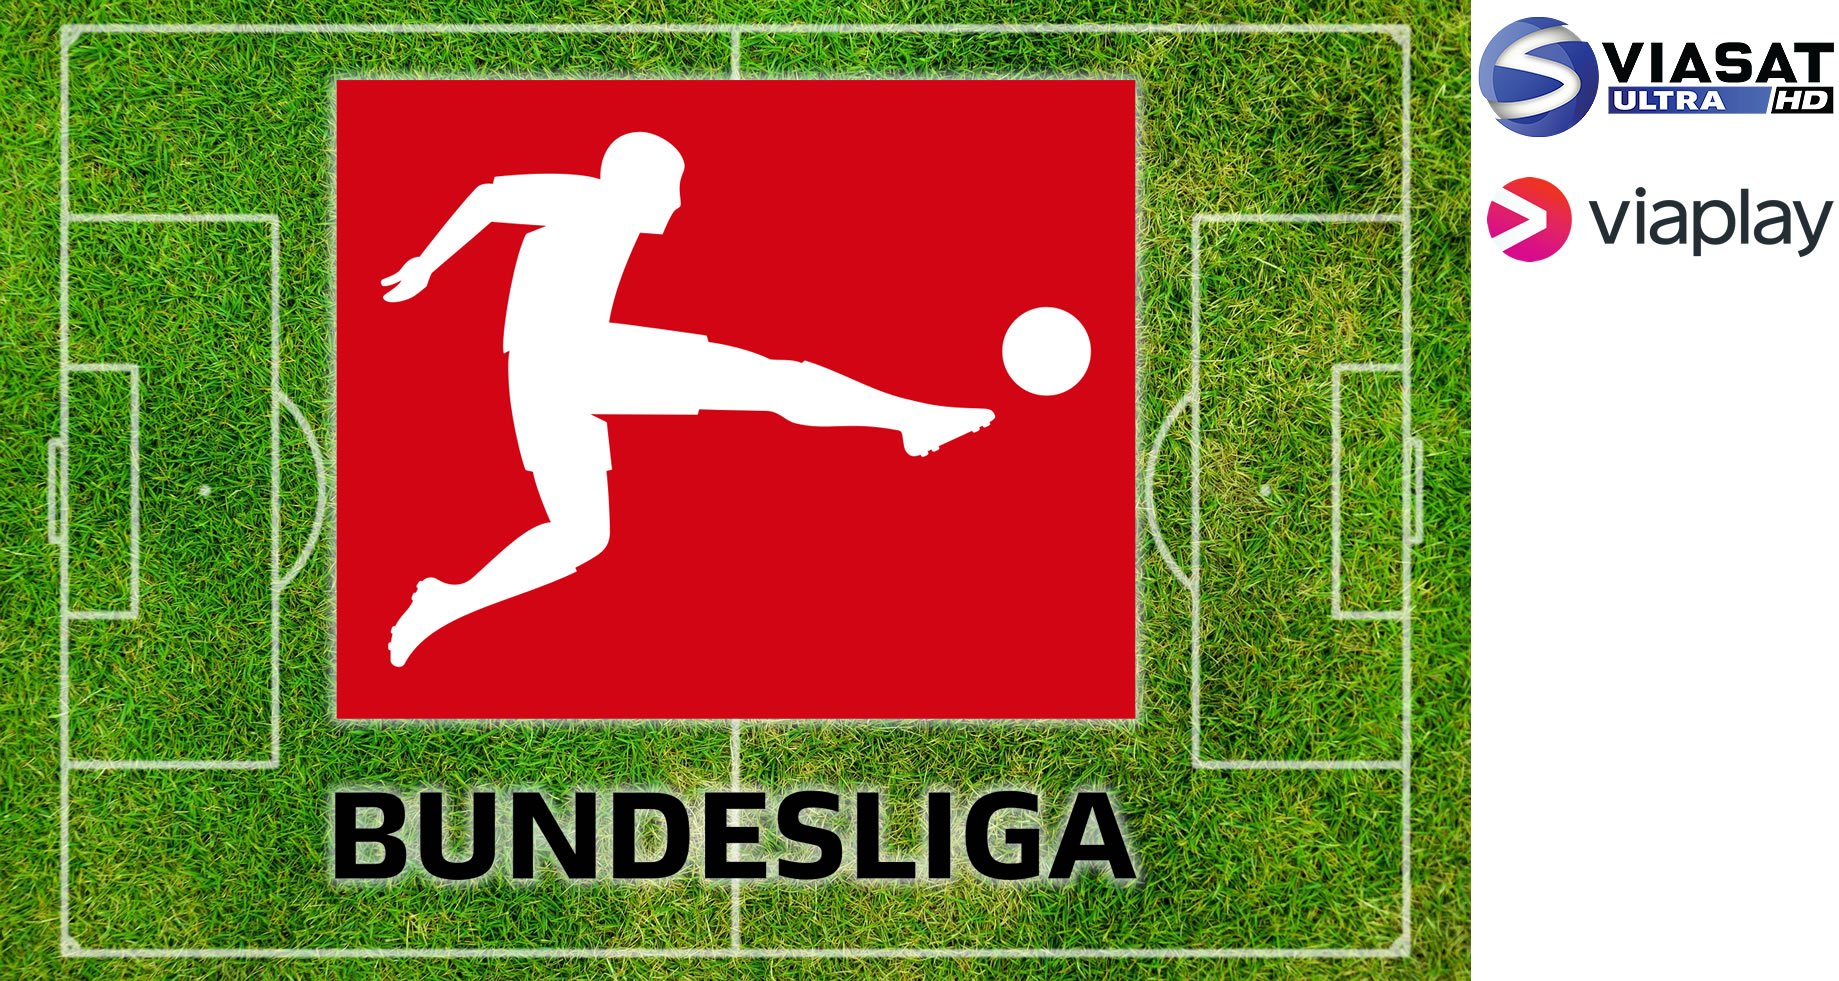 Viasat UHD Viaplay Bundesliga